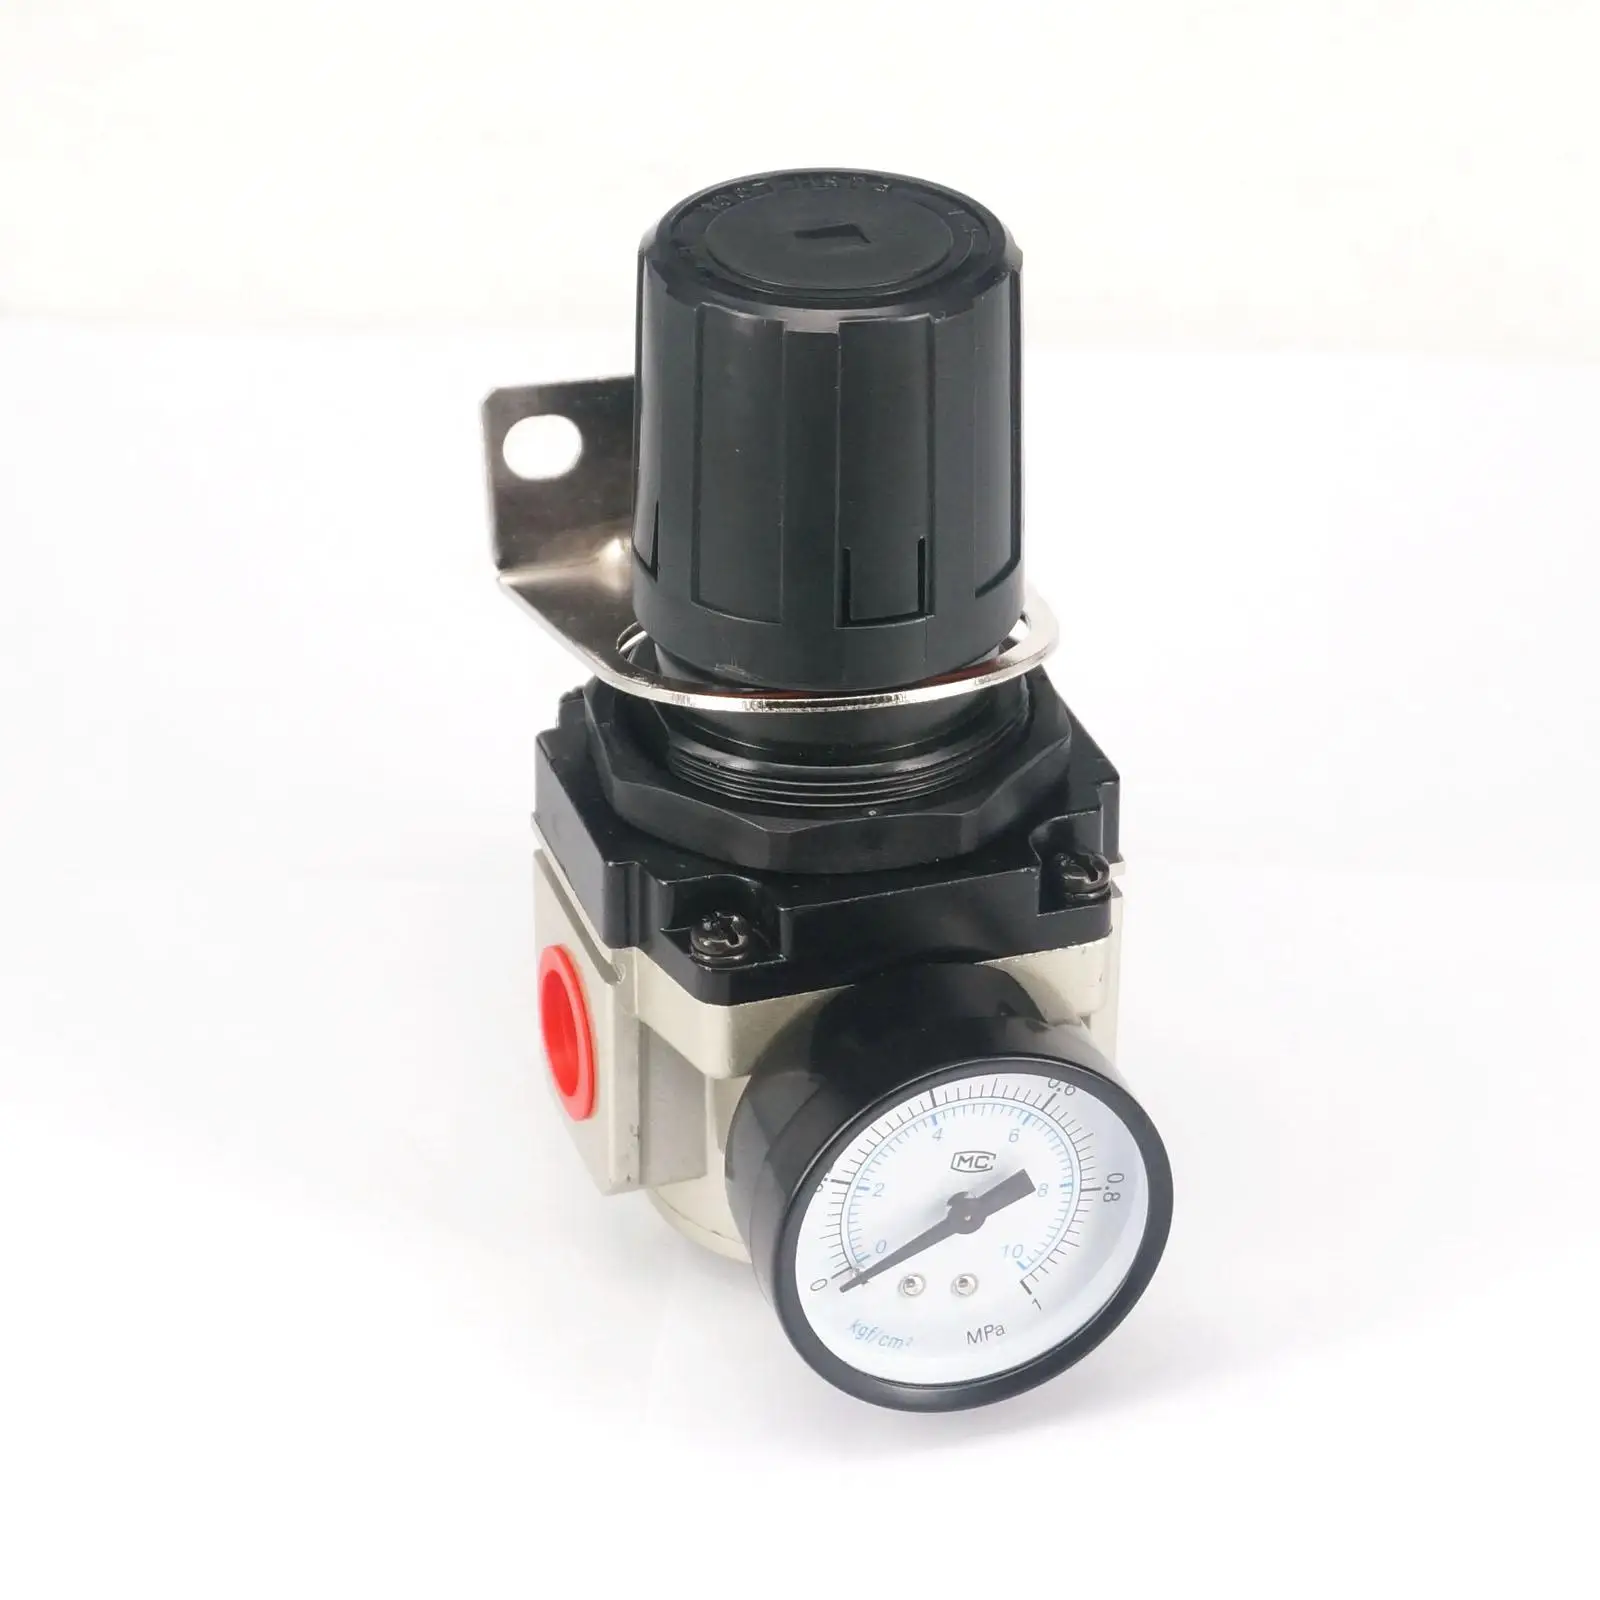 

AR4000-04 G1/2" Air Control Compressor Pressure Relief Regulating Regulator With Gauge And Bracket